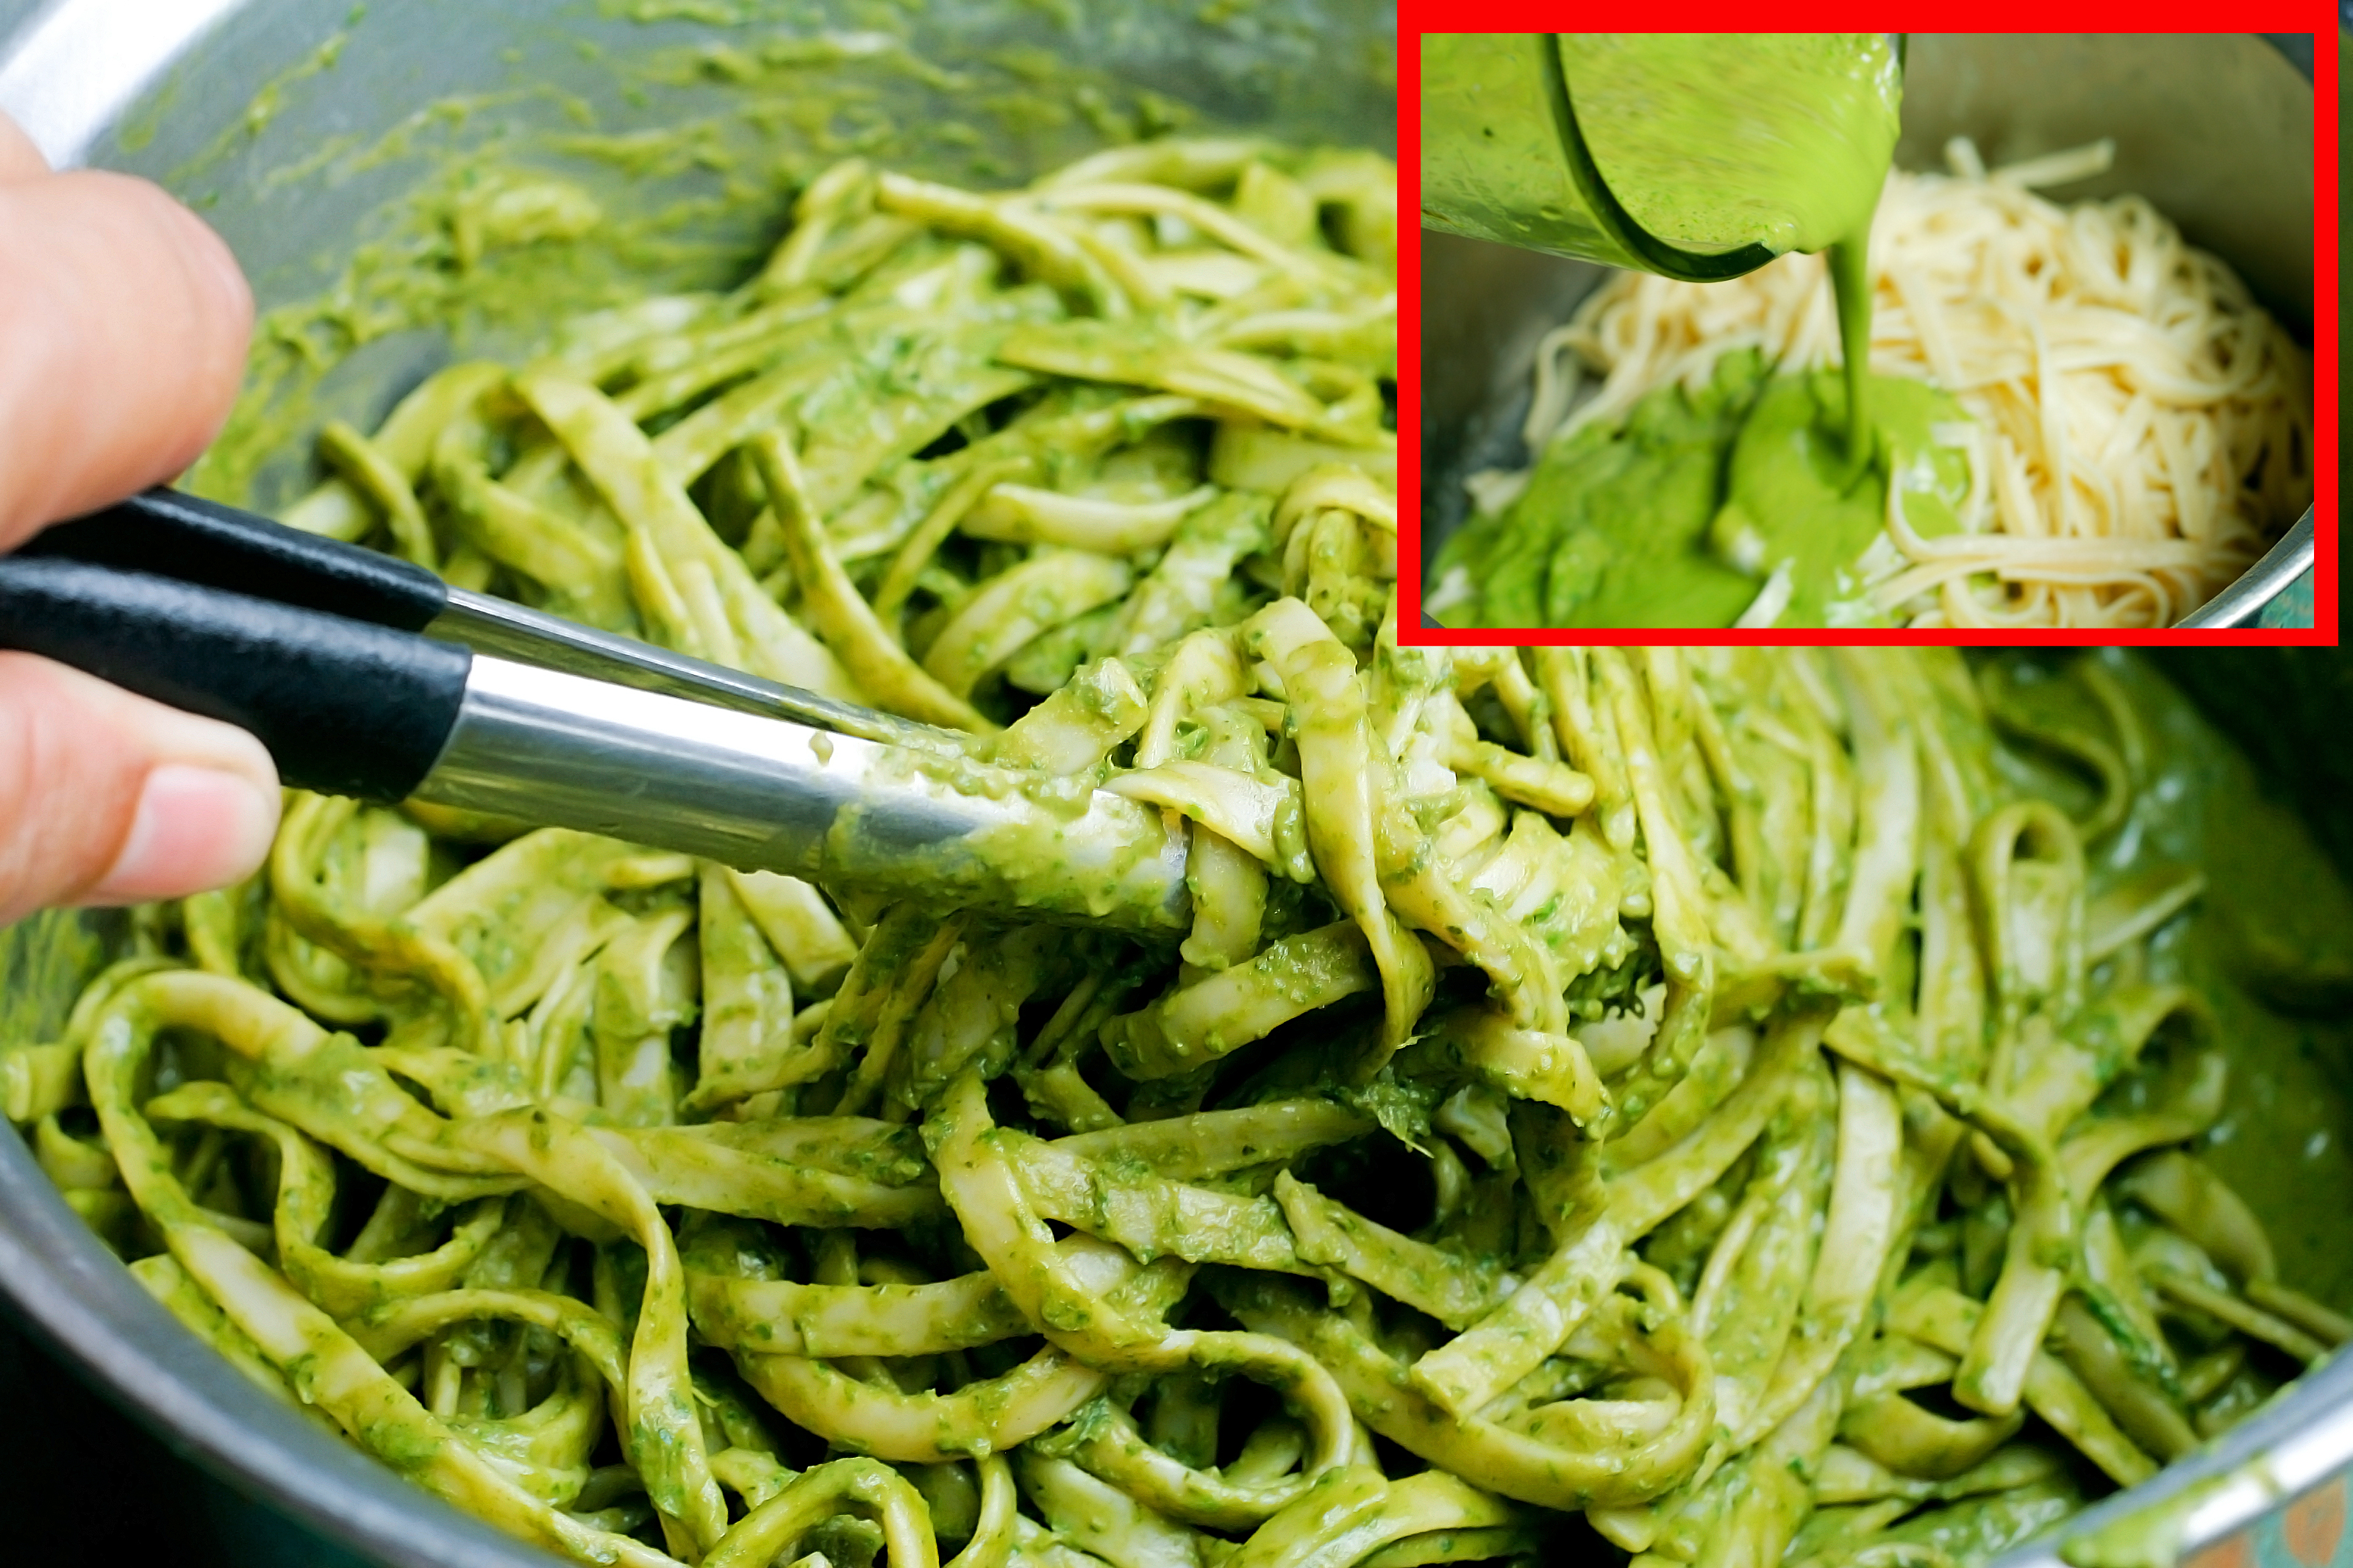 How to Make Green Spaghetti With Basil Pesto: 5 Steps